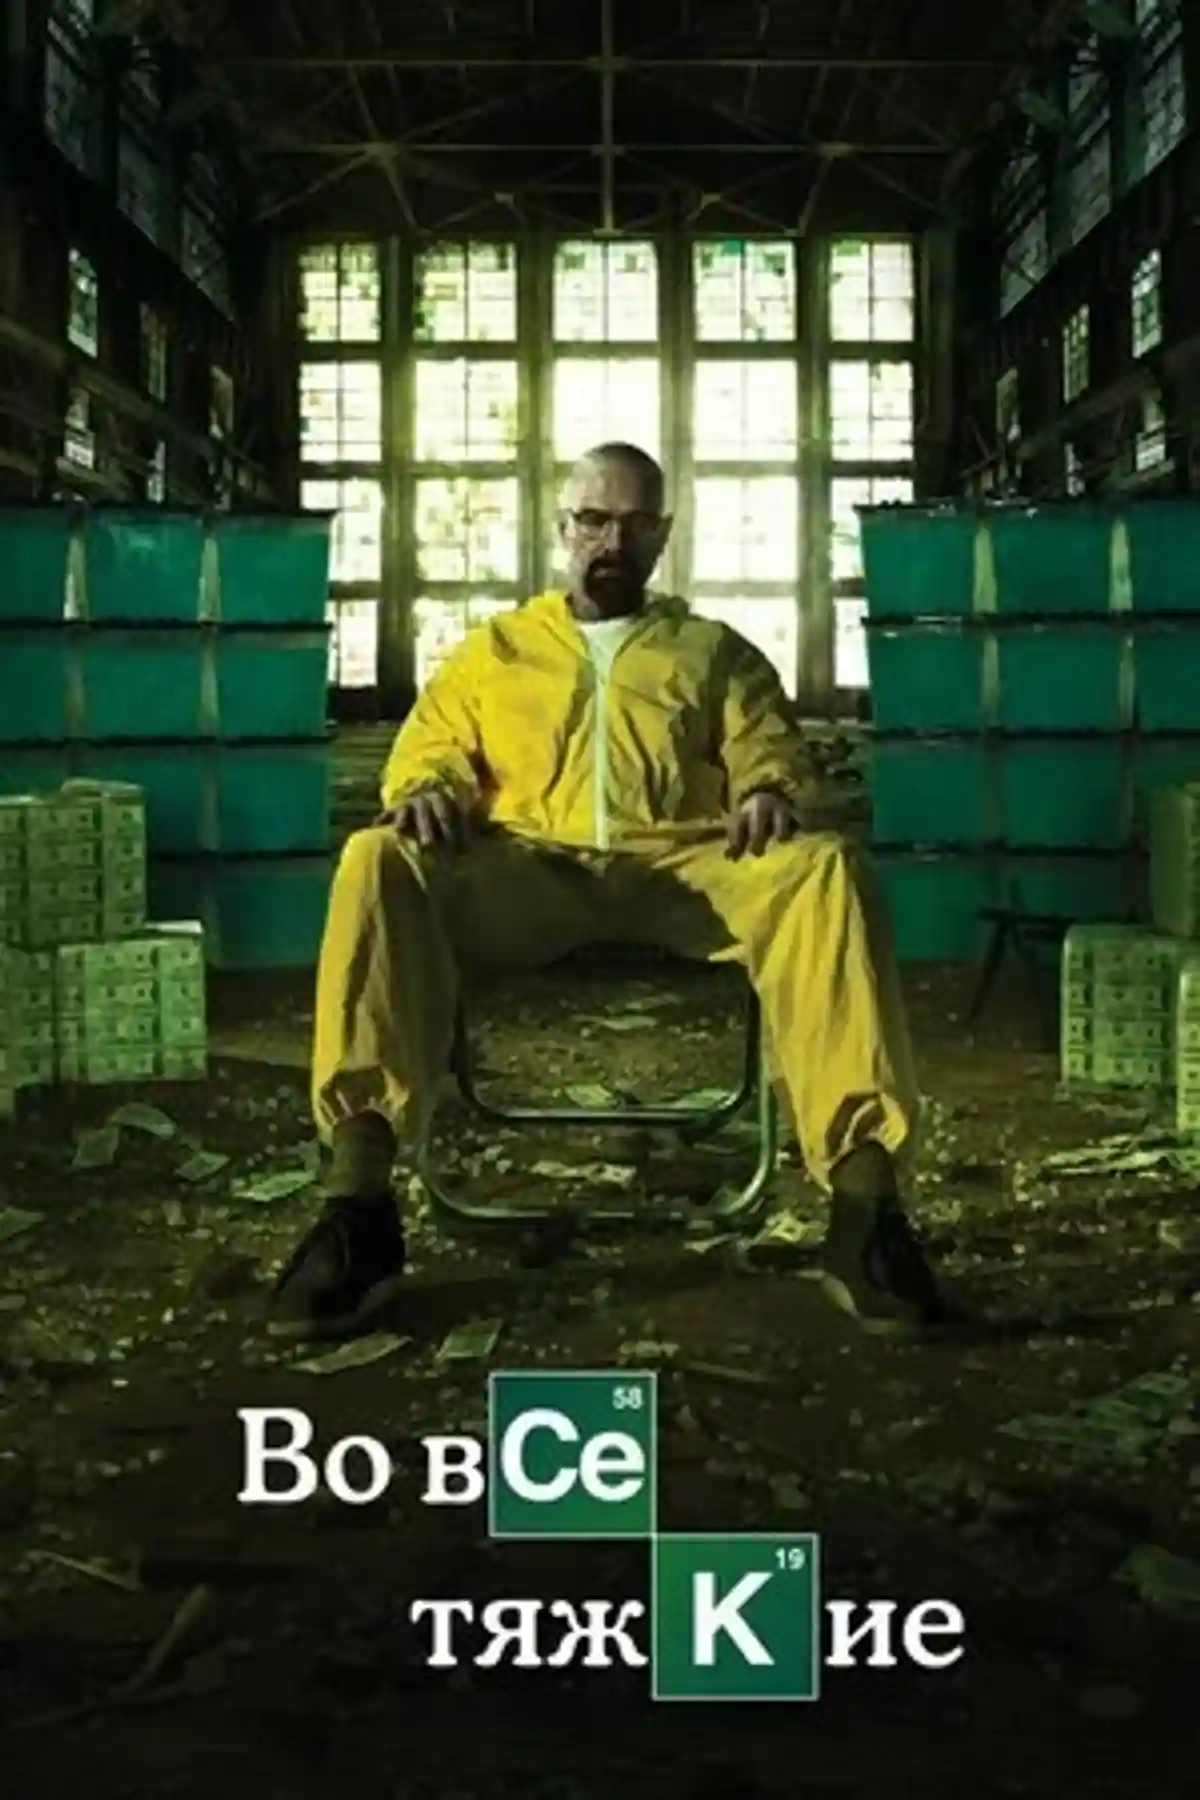 Постер сериала «Во все тяжкие» (Breaking Bad). Фото: kinopoisk.ru